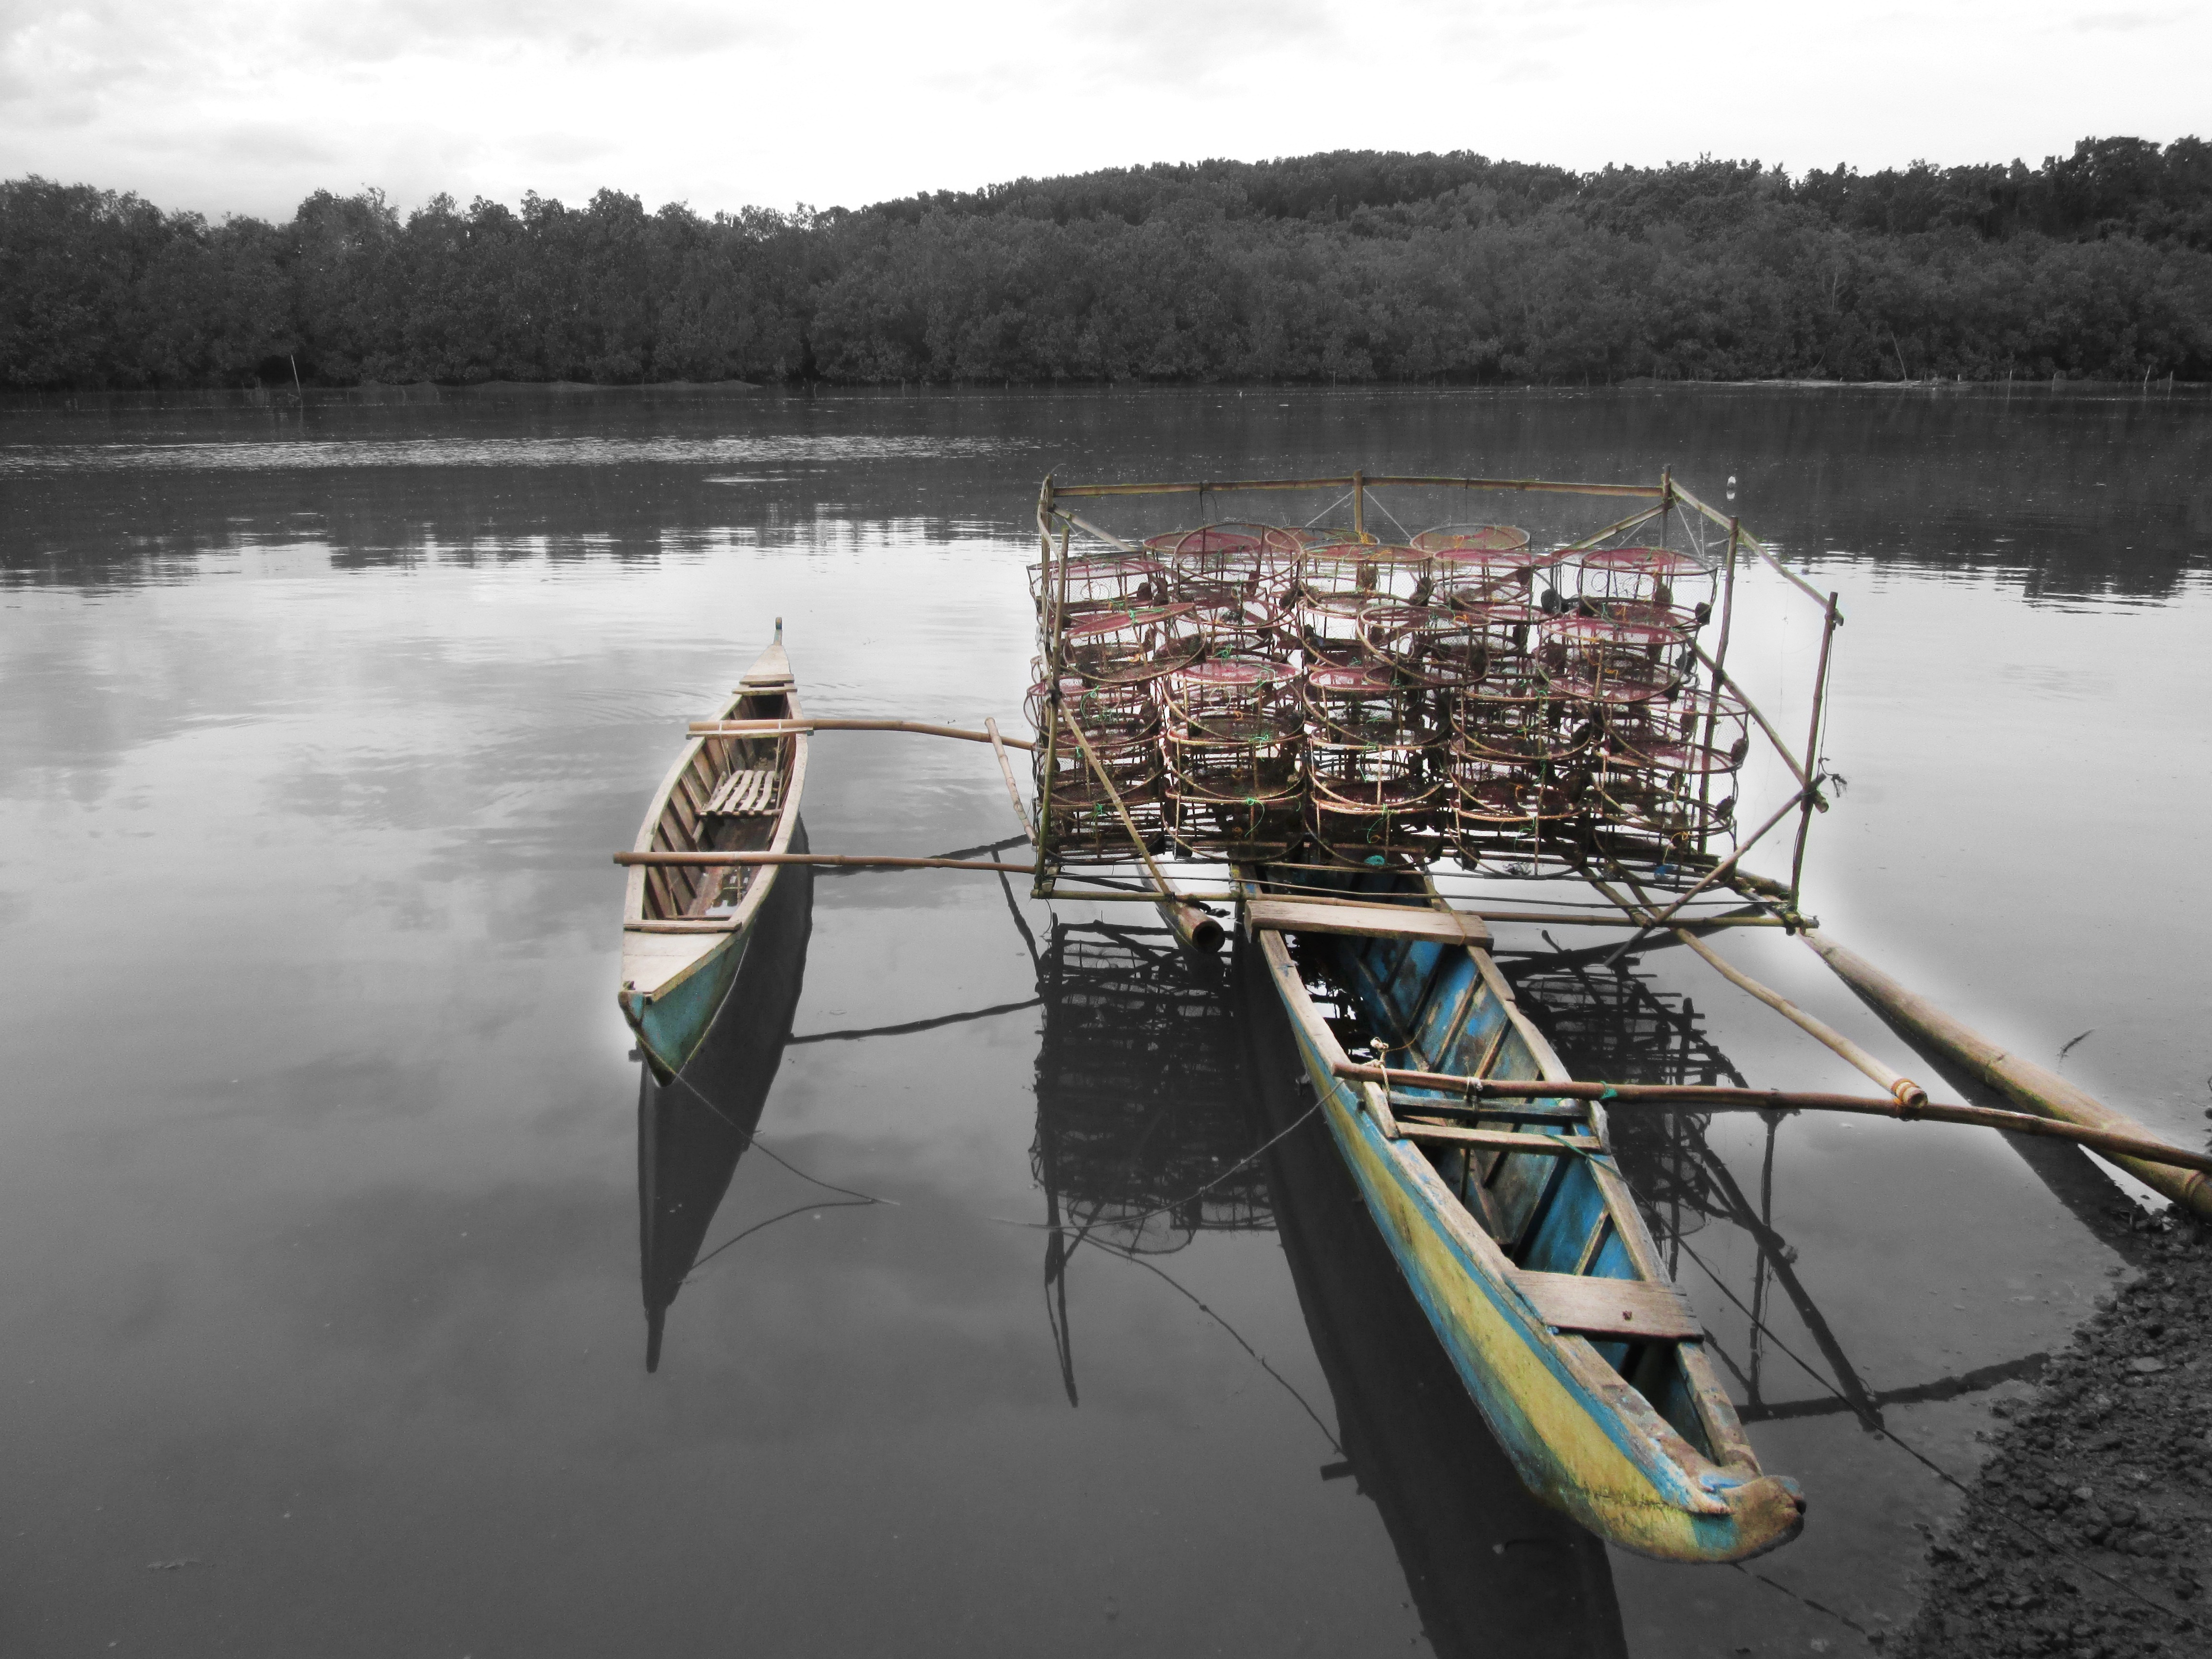 2 wooden rowboats